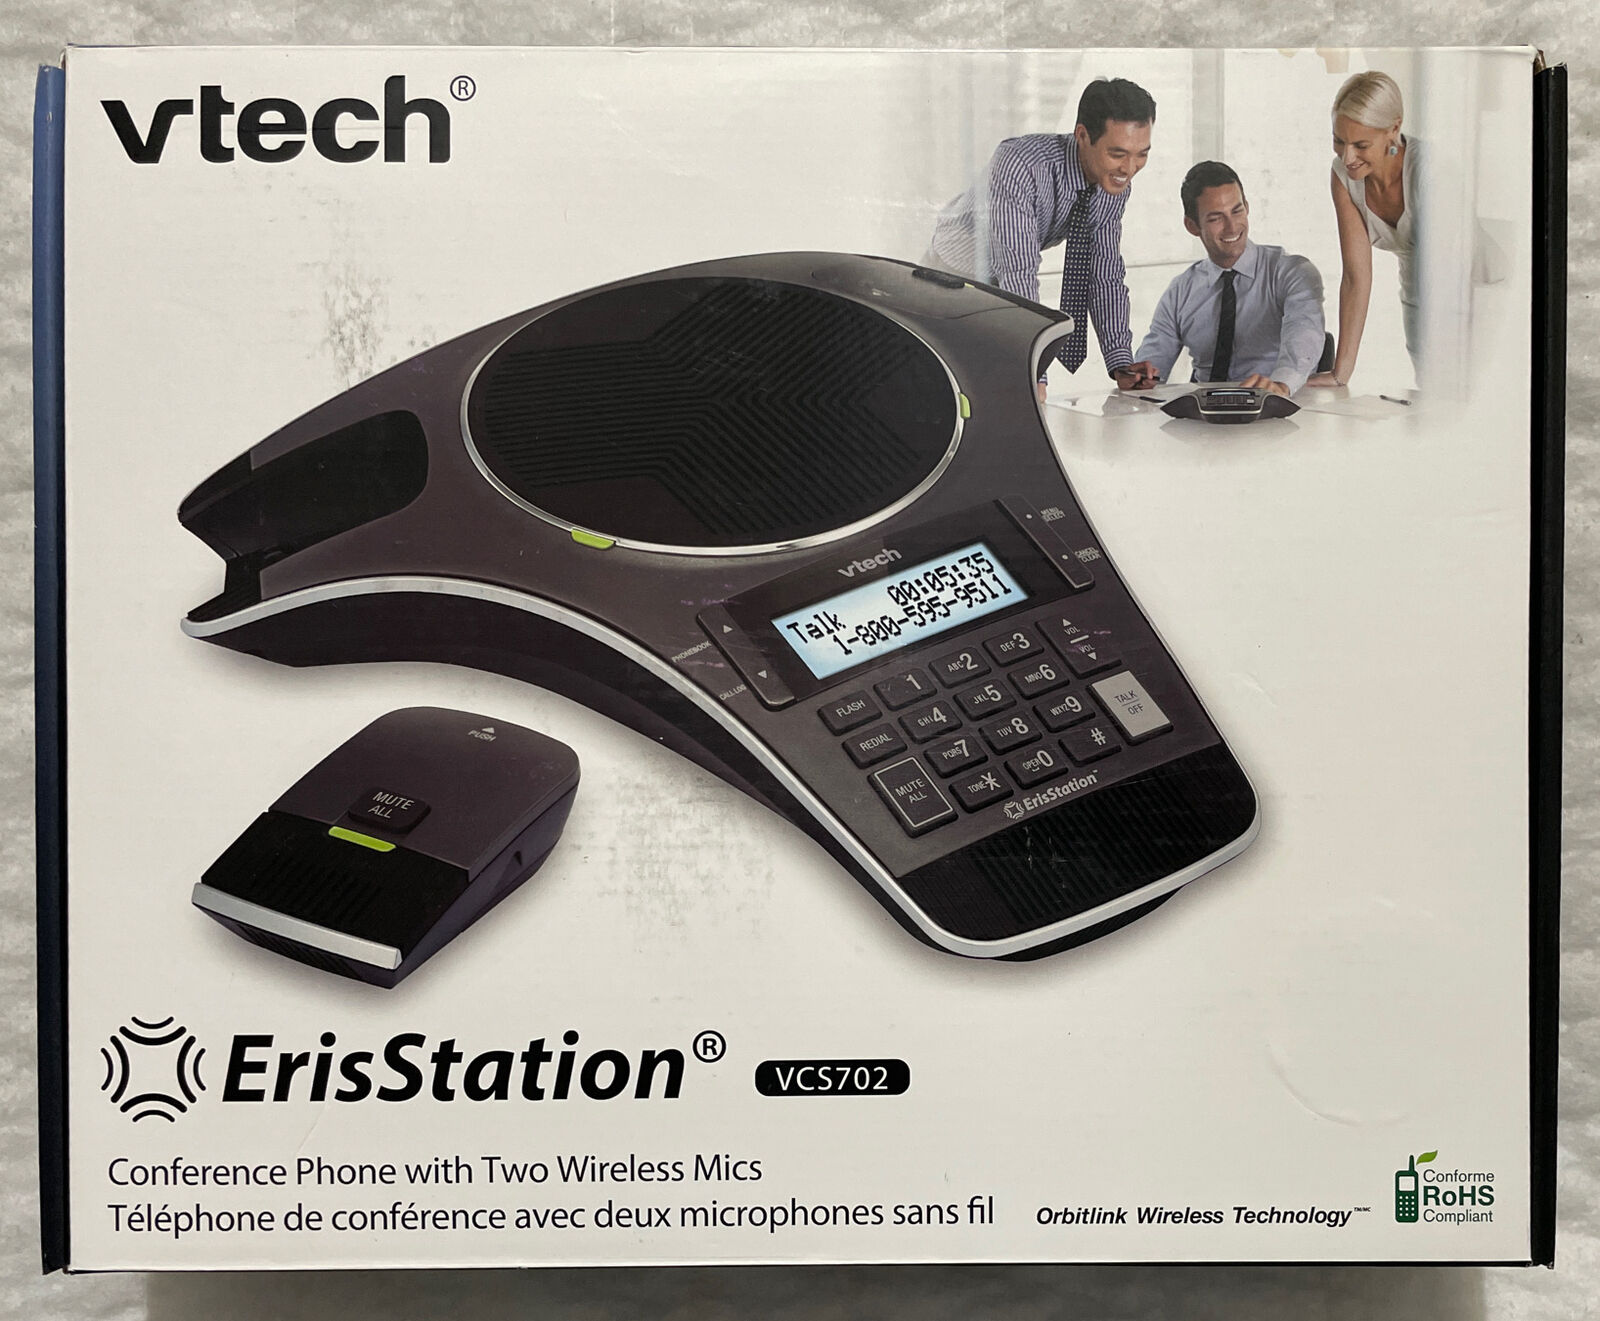 VTech ErisStation VCS702 Conference Phone W/ 2 Orbitlink Wirel...